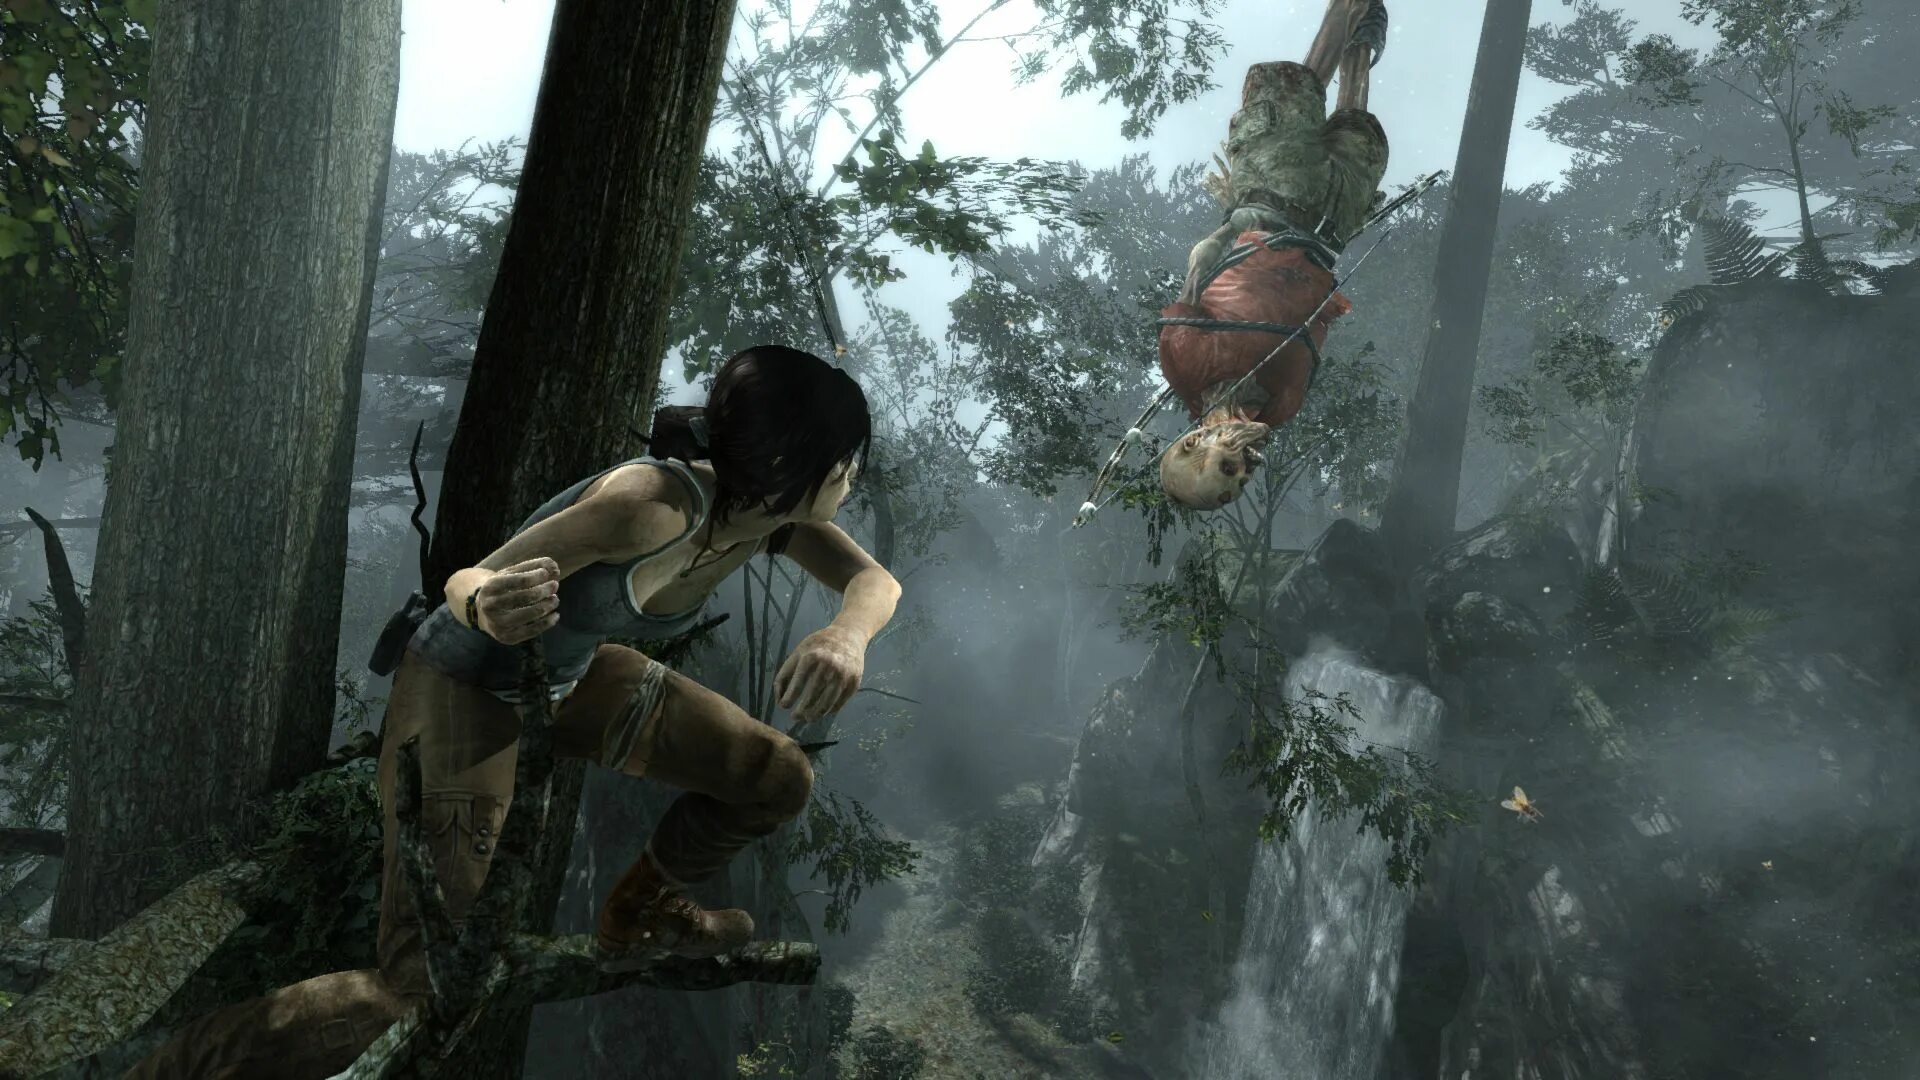 Lara croft island. Tomb Raider 2013. Томб Райдер остров Яматай. Tomb Raider (игра, 2013).